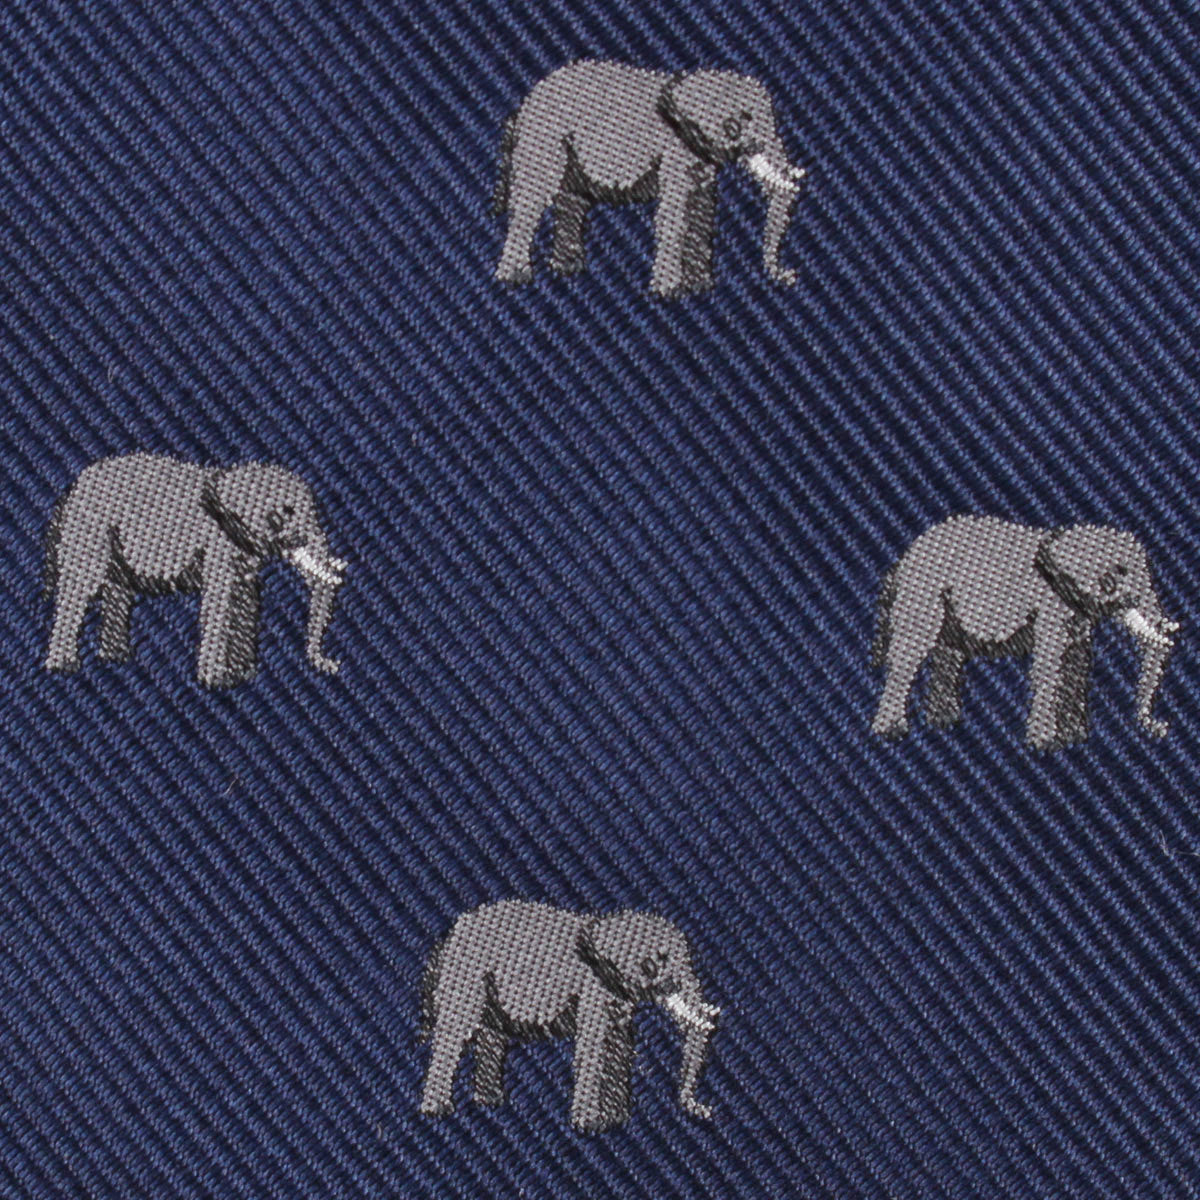 African Forest Elephant Fabric Self Diamond Bowtie